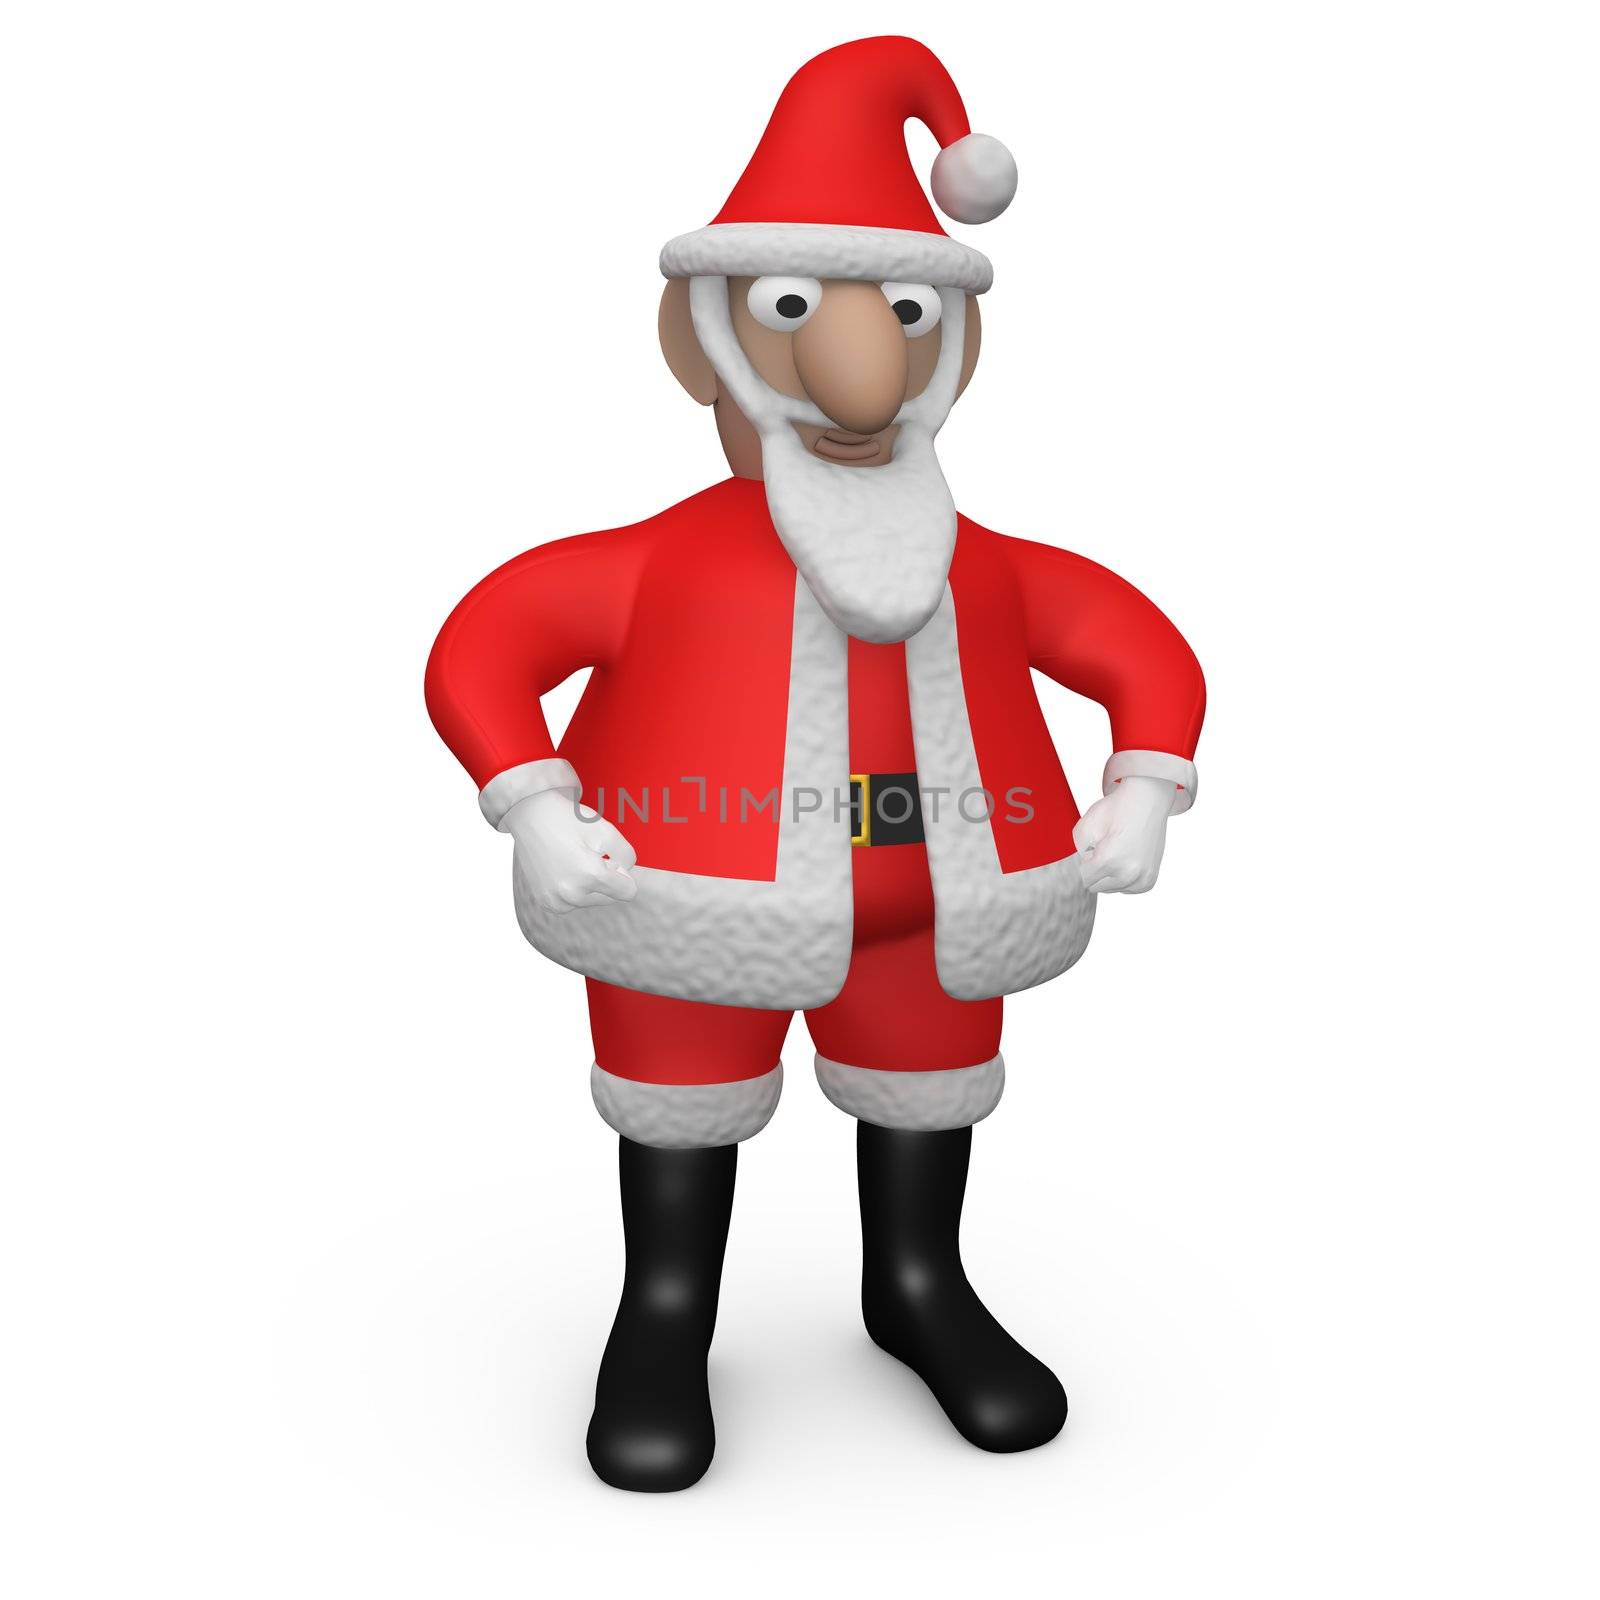 Santa-Claus by 3pod